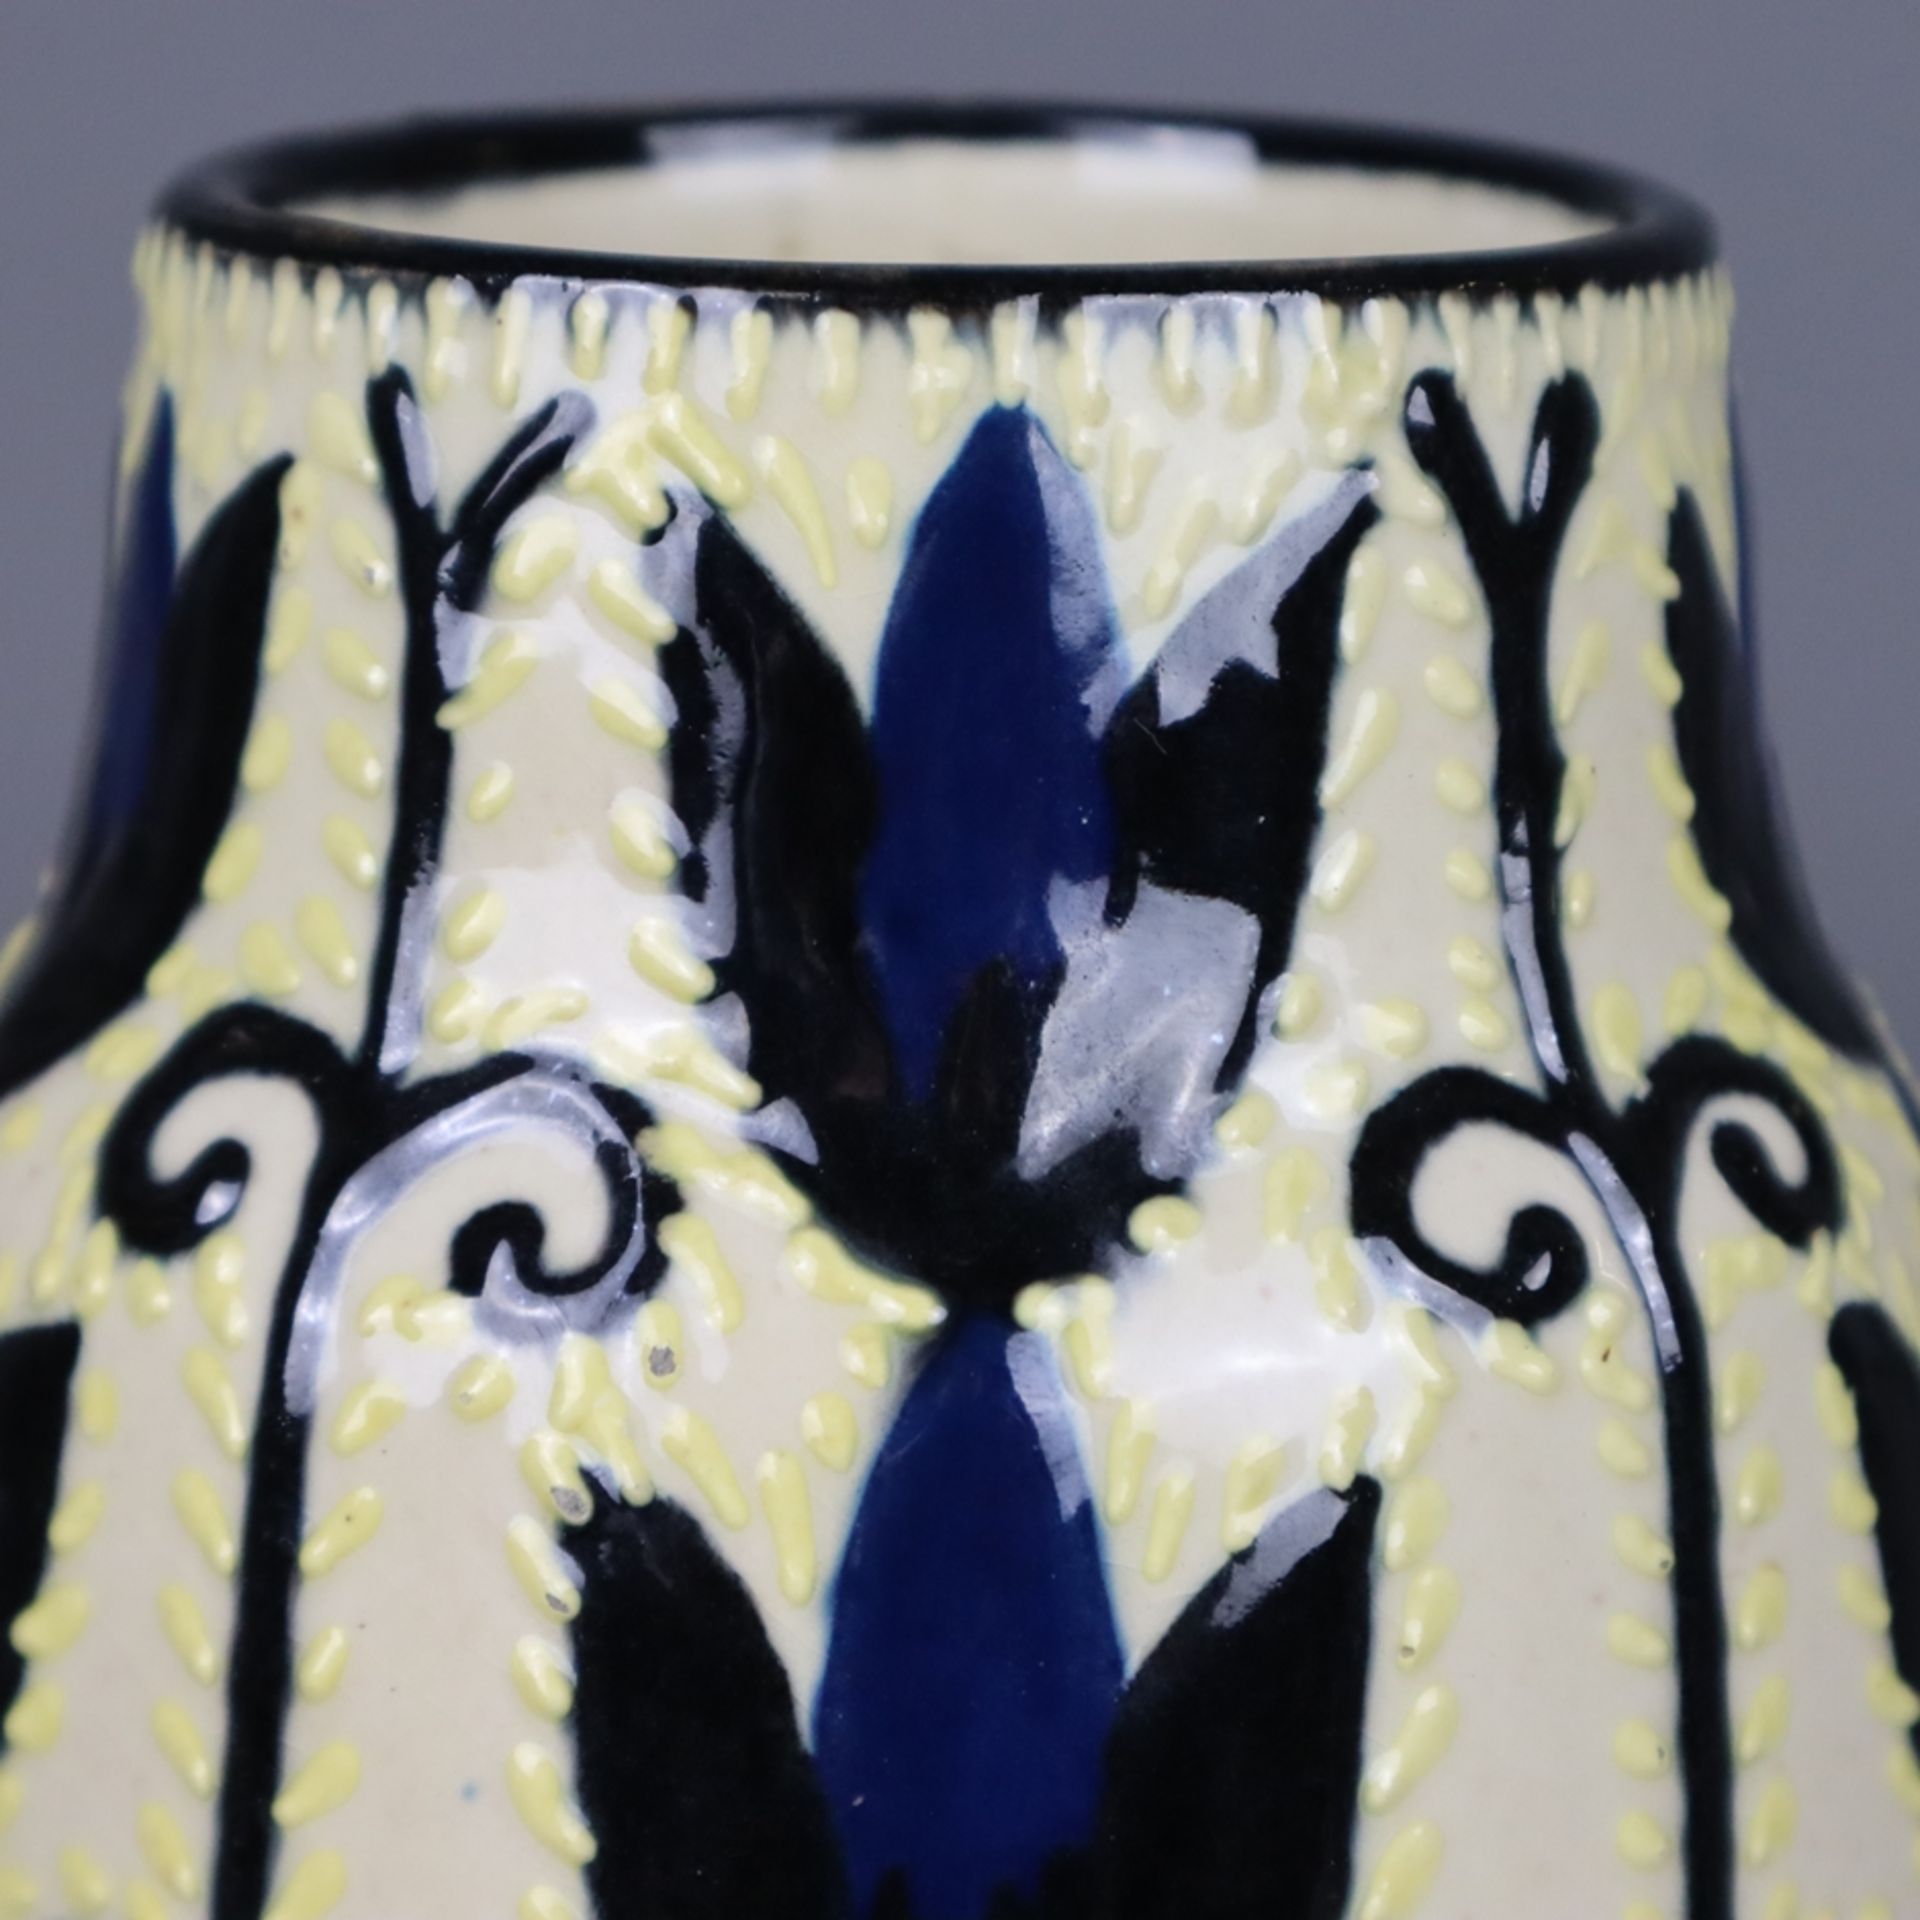 Keramikvase - Tonwerke Kandern, nach 1915, Mod.nr.: 953, konisch zulaufende For - Image 3 of 6